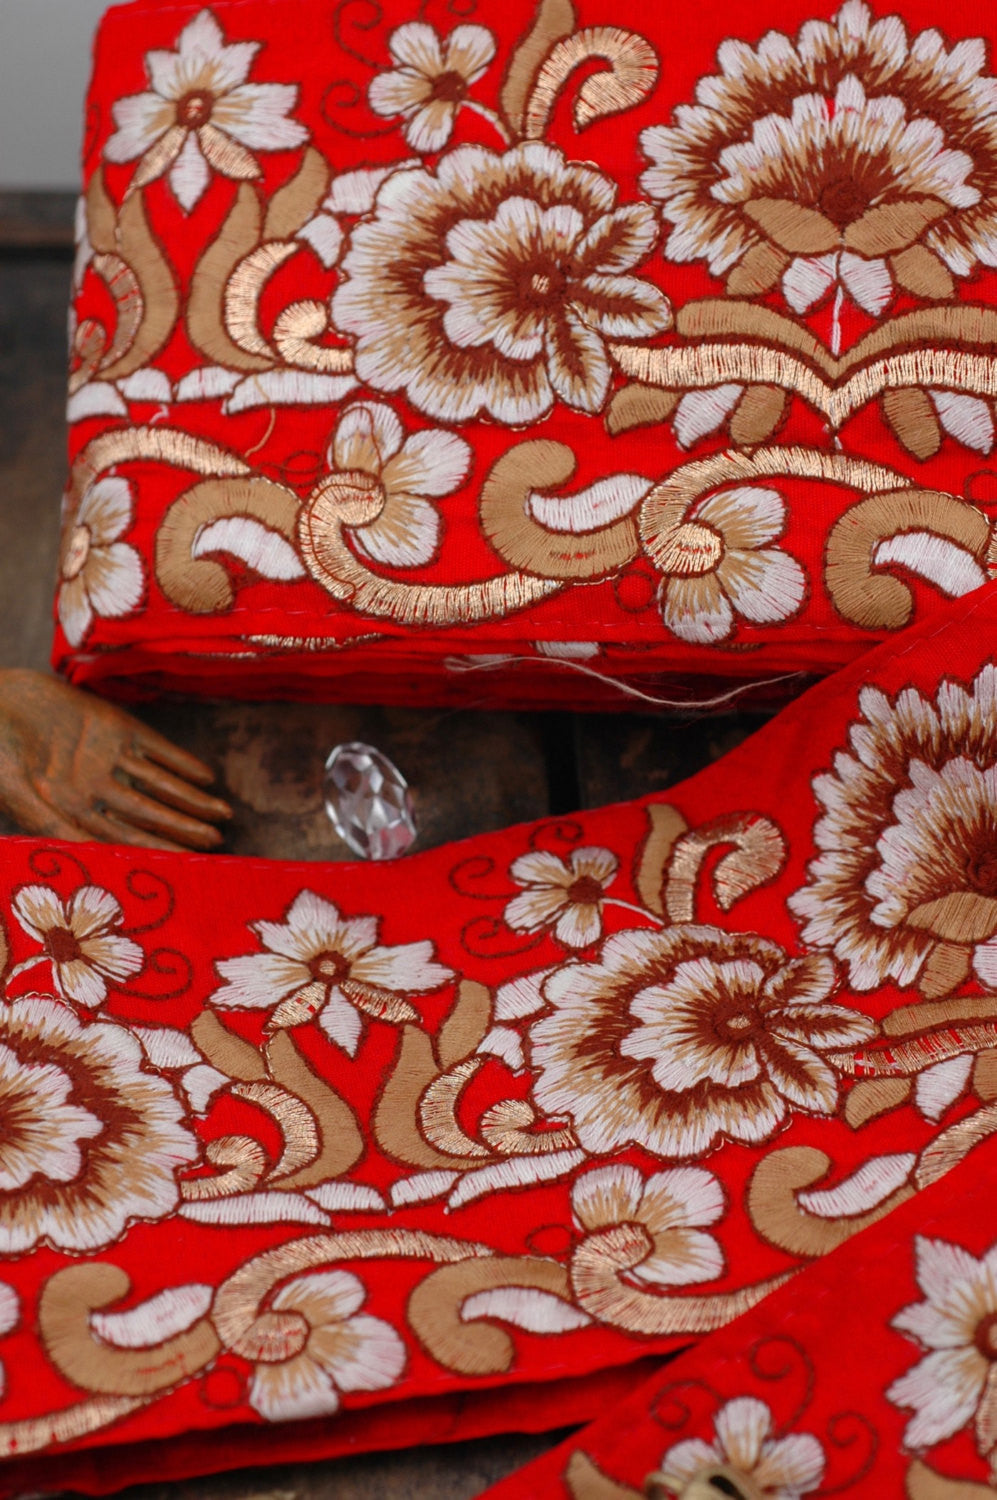 Crimson Garden: Red and Gold Silk Trim, Ribbon, Sari Border, India 4"x1 Yard, Winter Floral Craft and Sewing Supplies, Metallic Accents - ShopWomanShopsWorld.com. Bone Beads, Tassels, Pom Poms, African Beads.